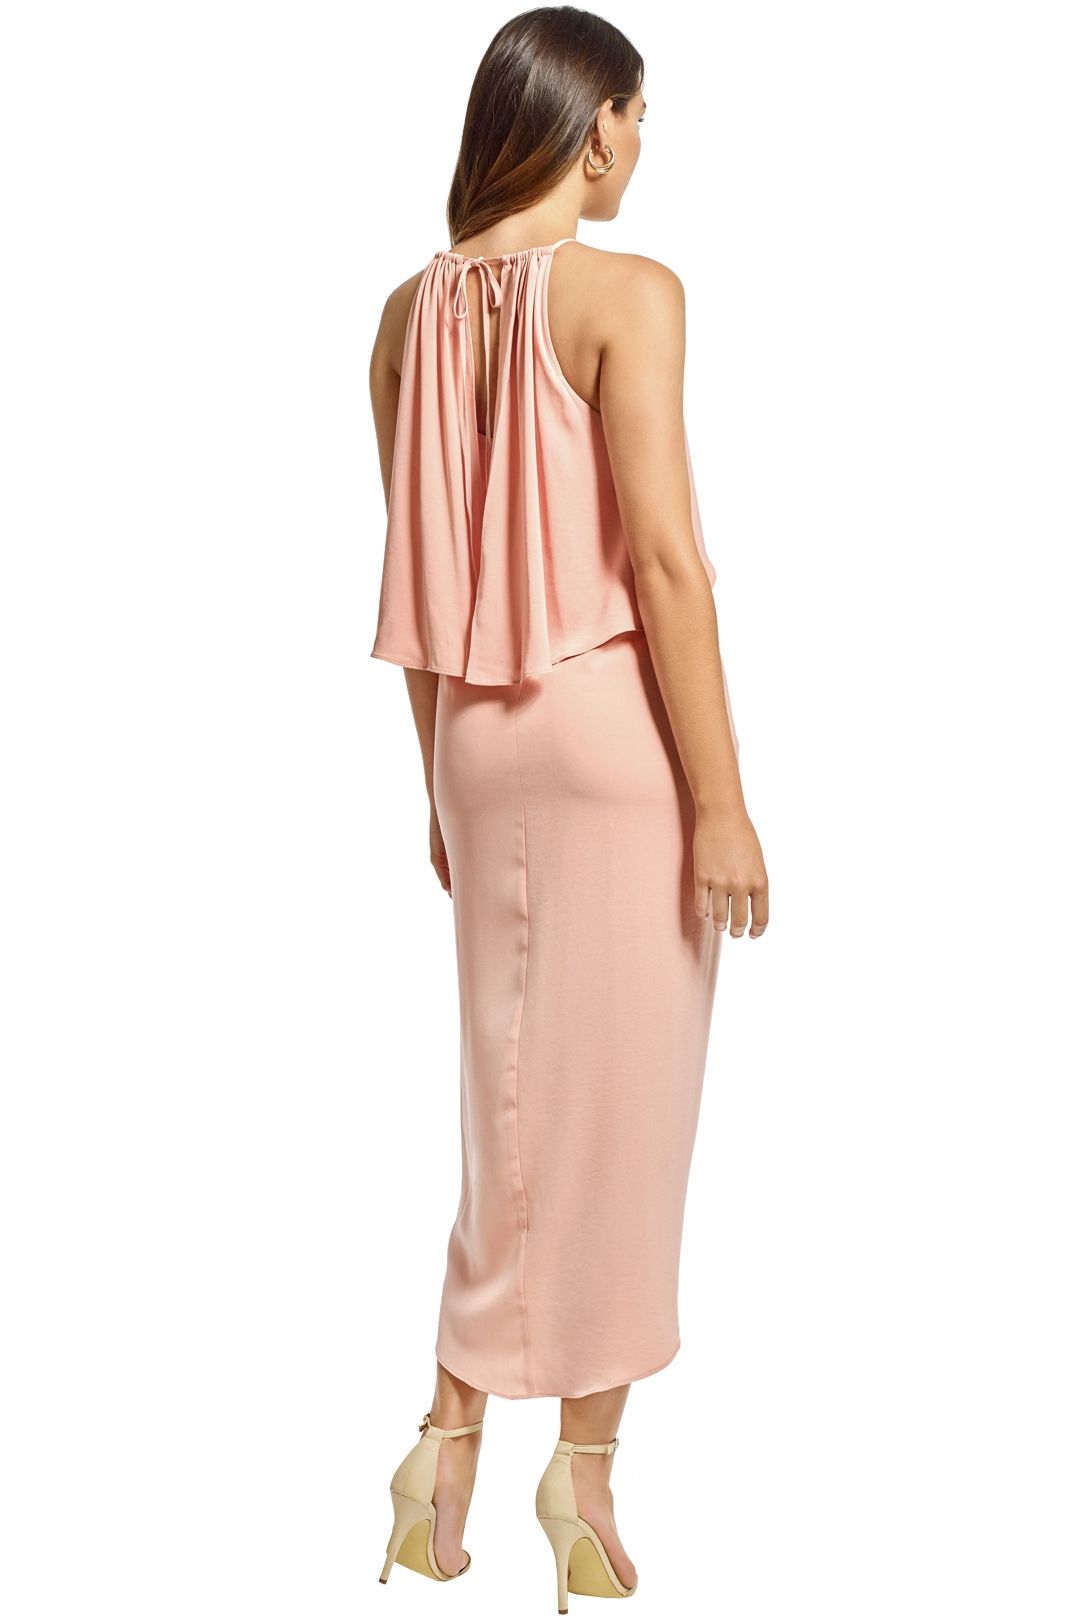 Shona Joy - Frill High Neck Drape Maxi Dress - Dusty Pink - Back